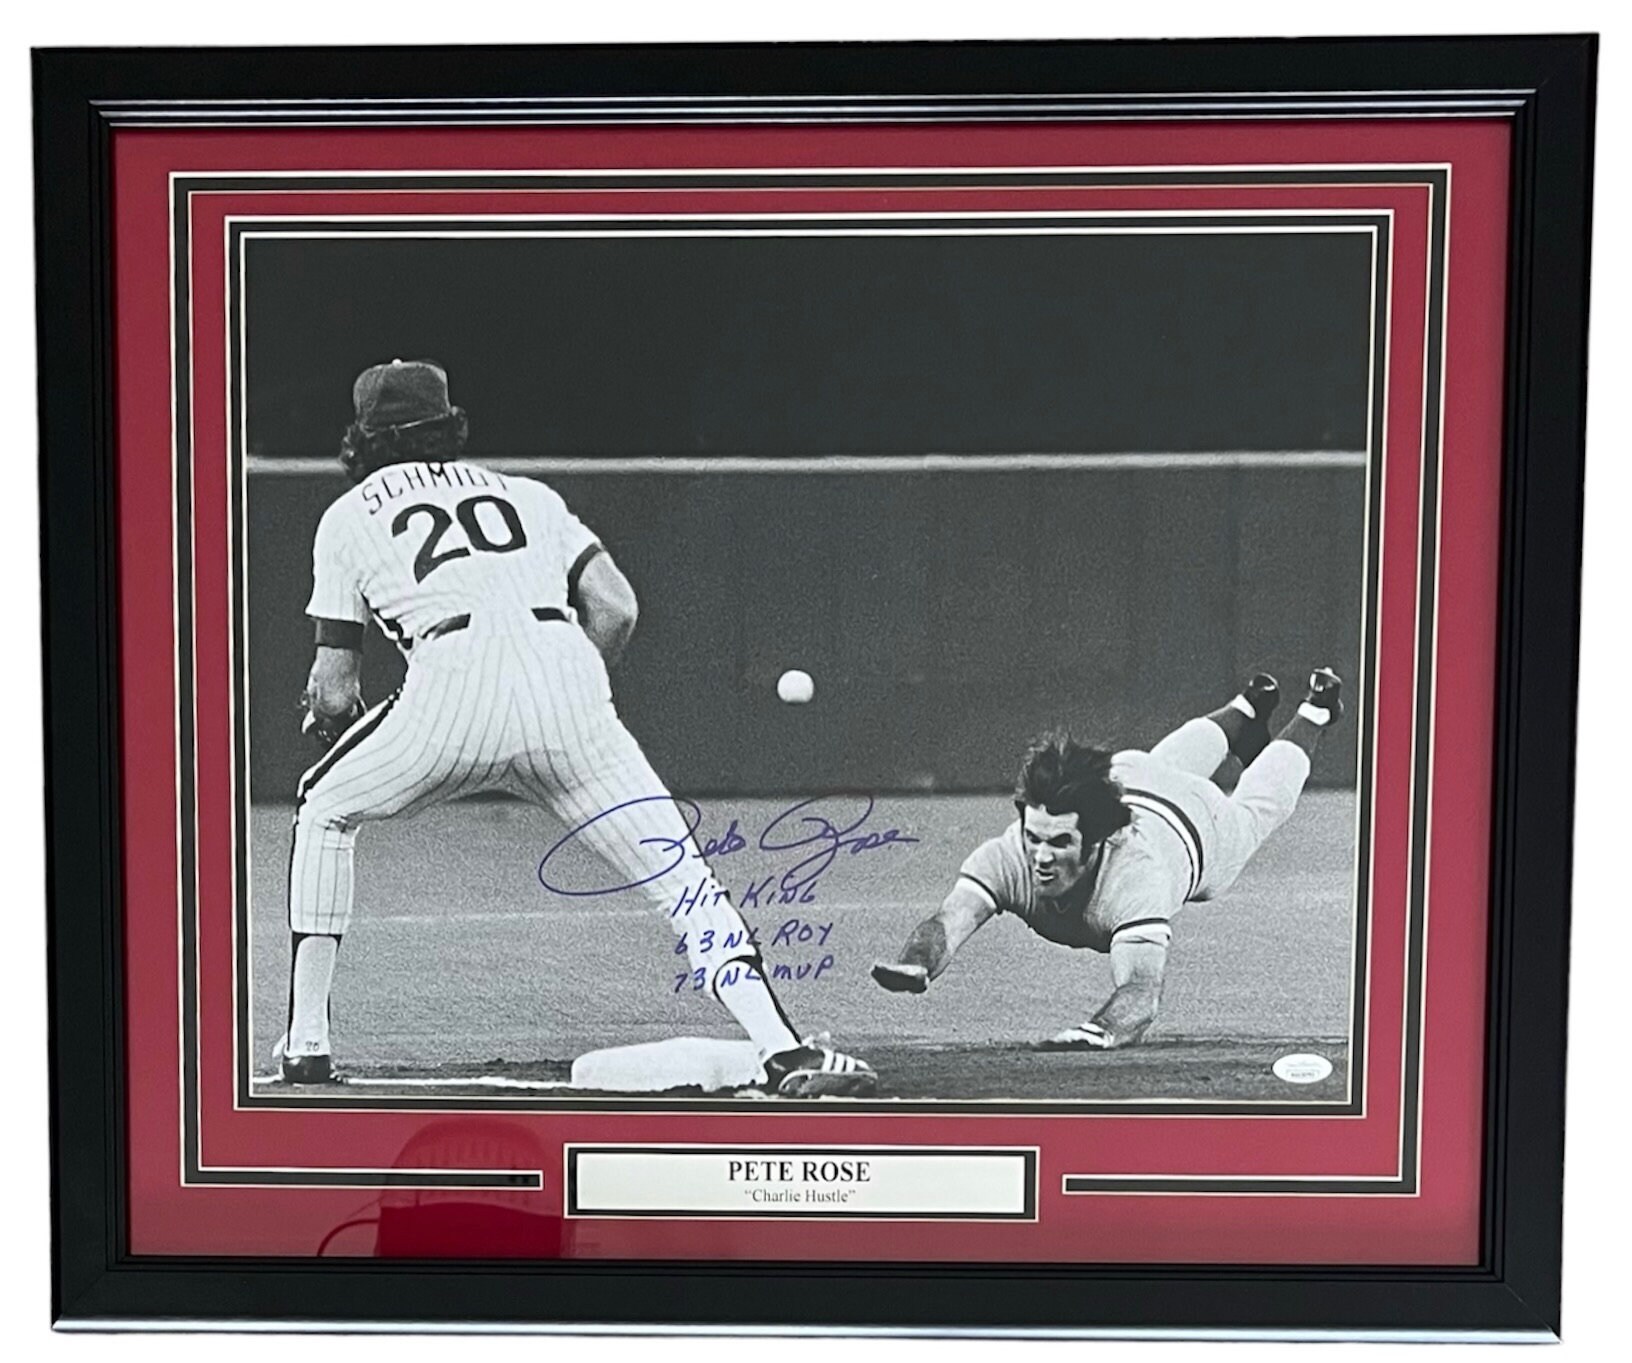 Pete Rose 1980 World Series Philadelphia Phillies Autographed Framed  Baseball Photo - 11x14 Framed Photo